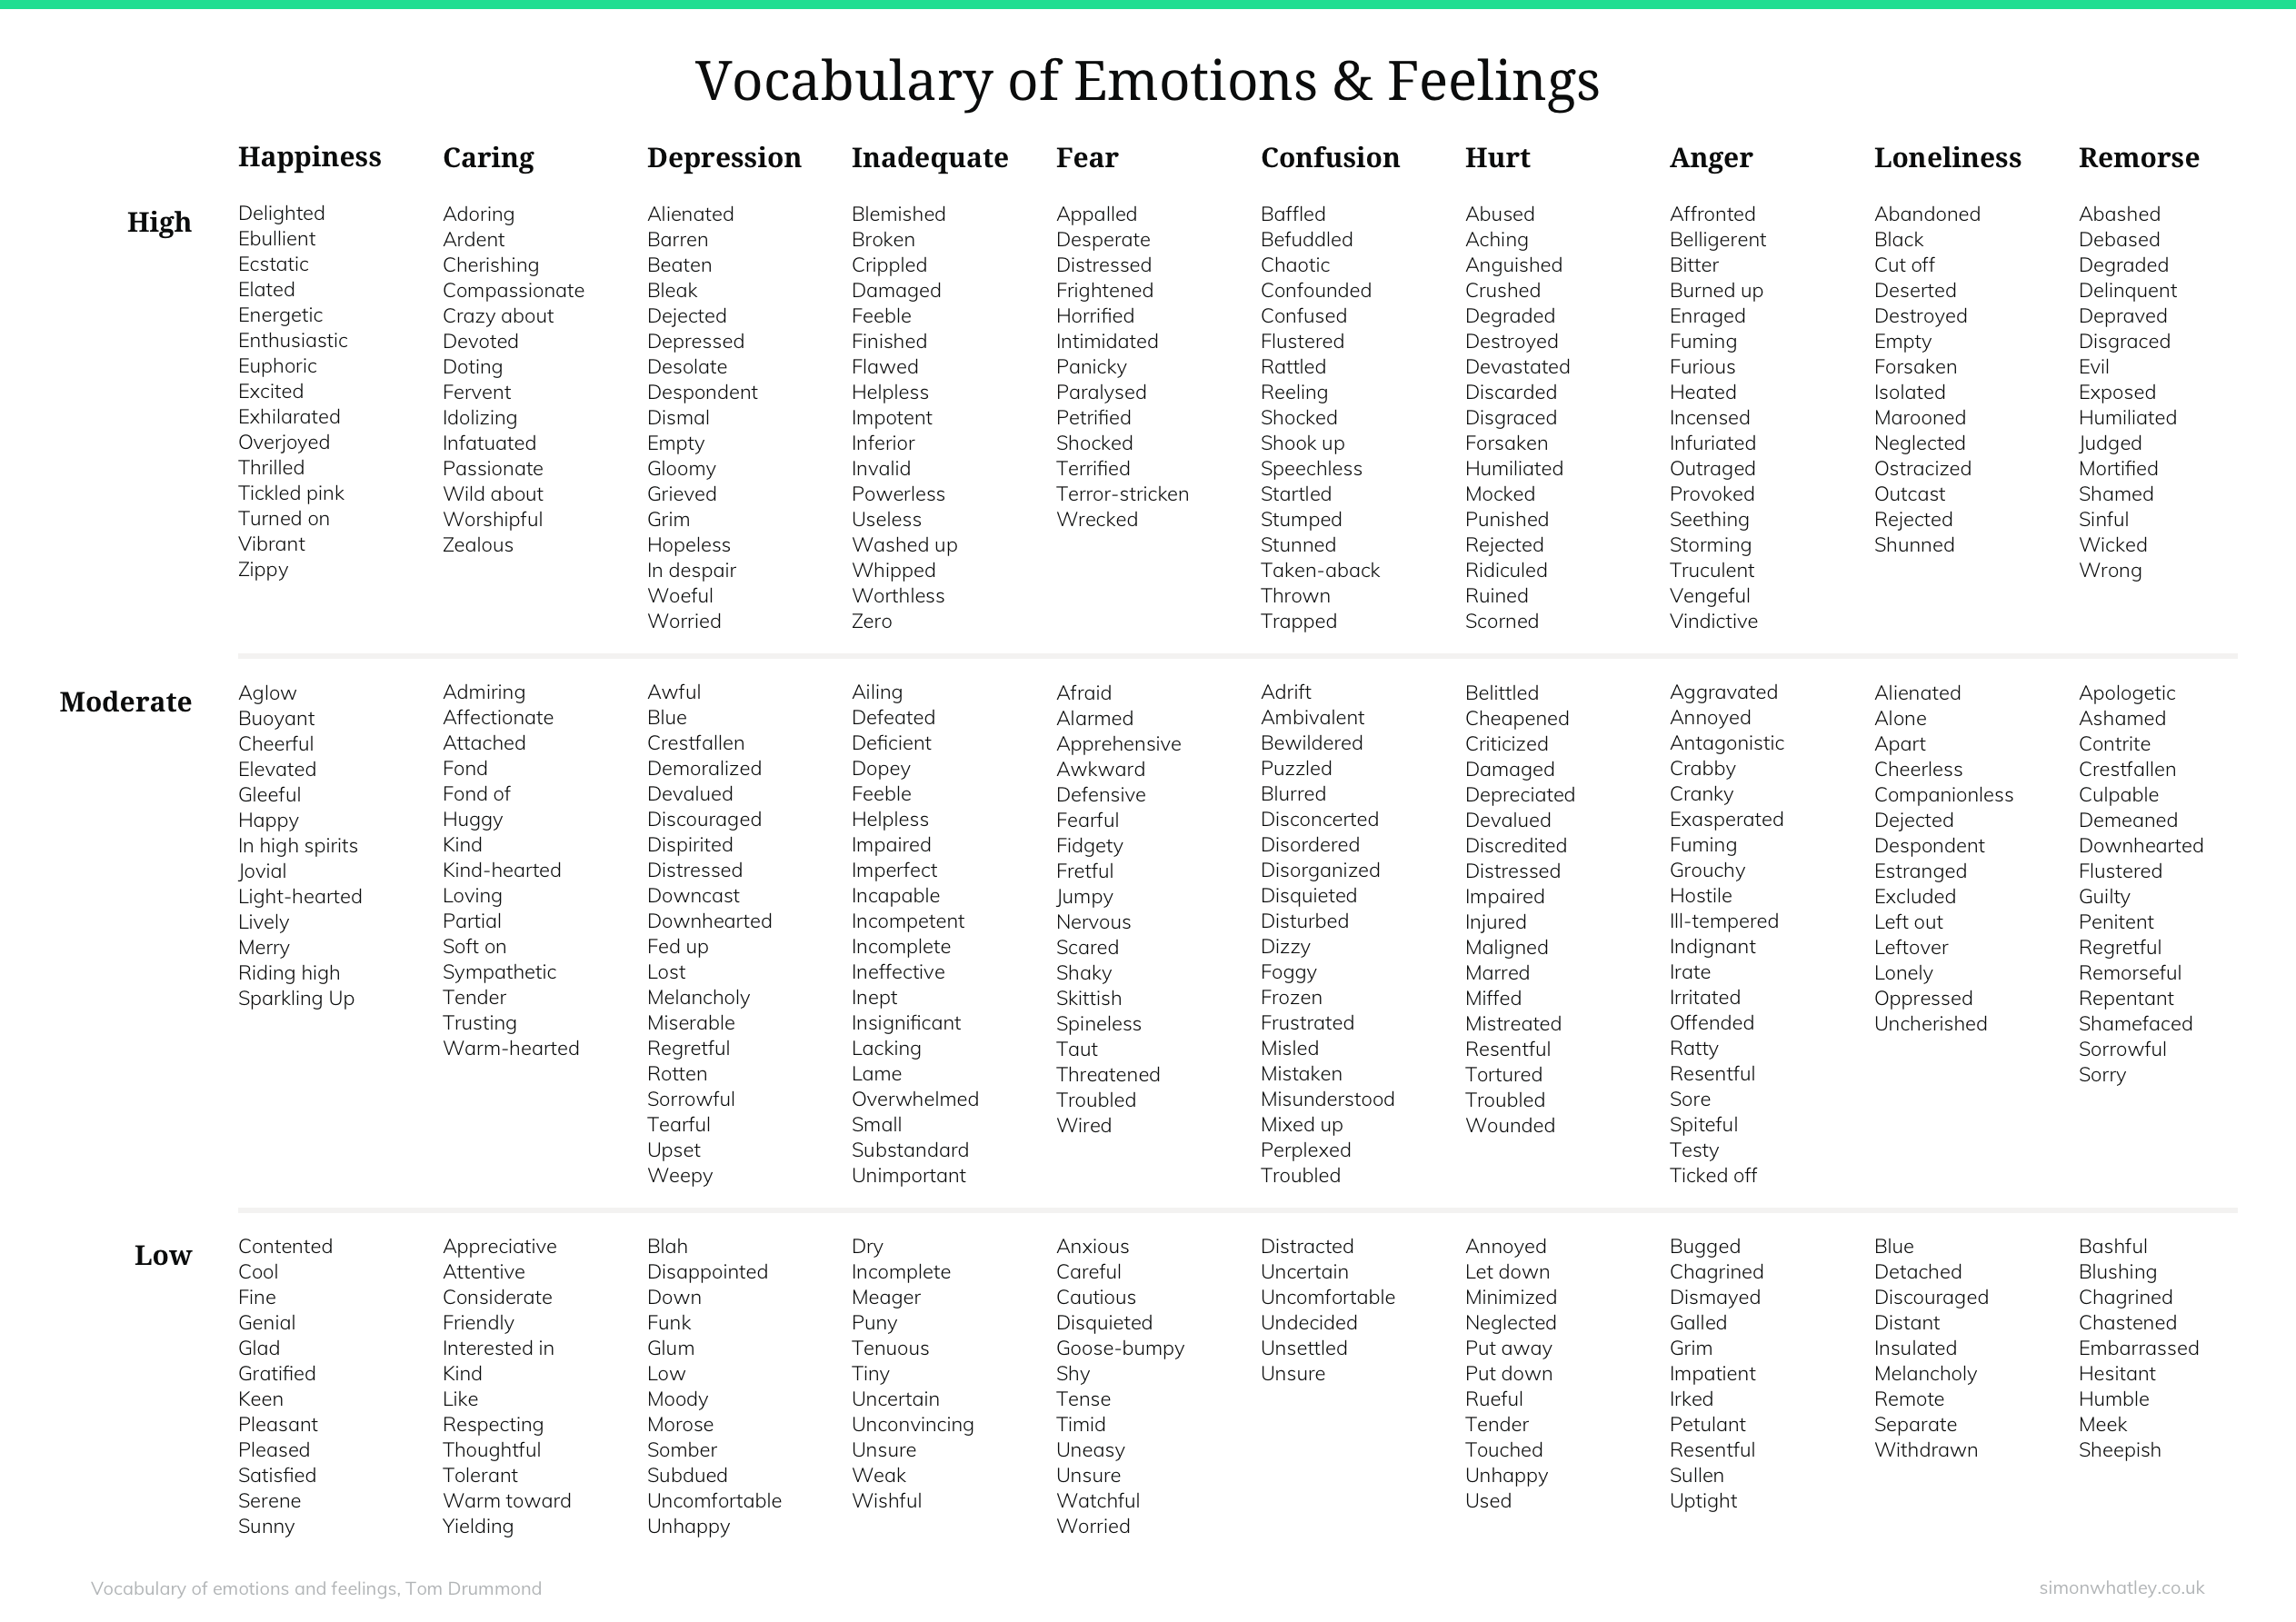 Vocabulary of emotions